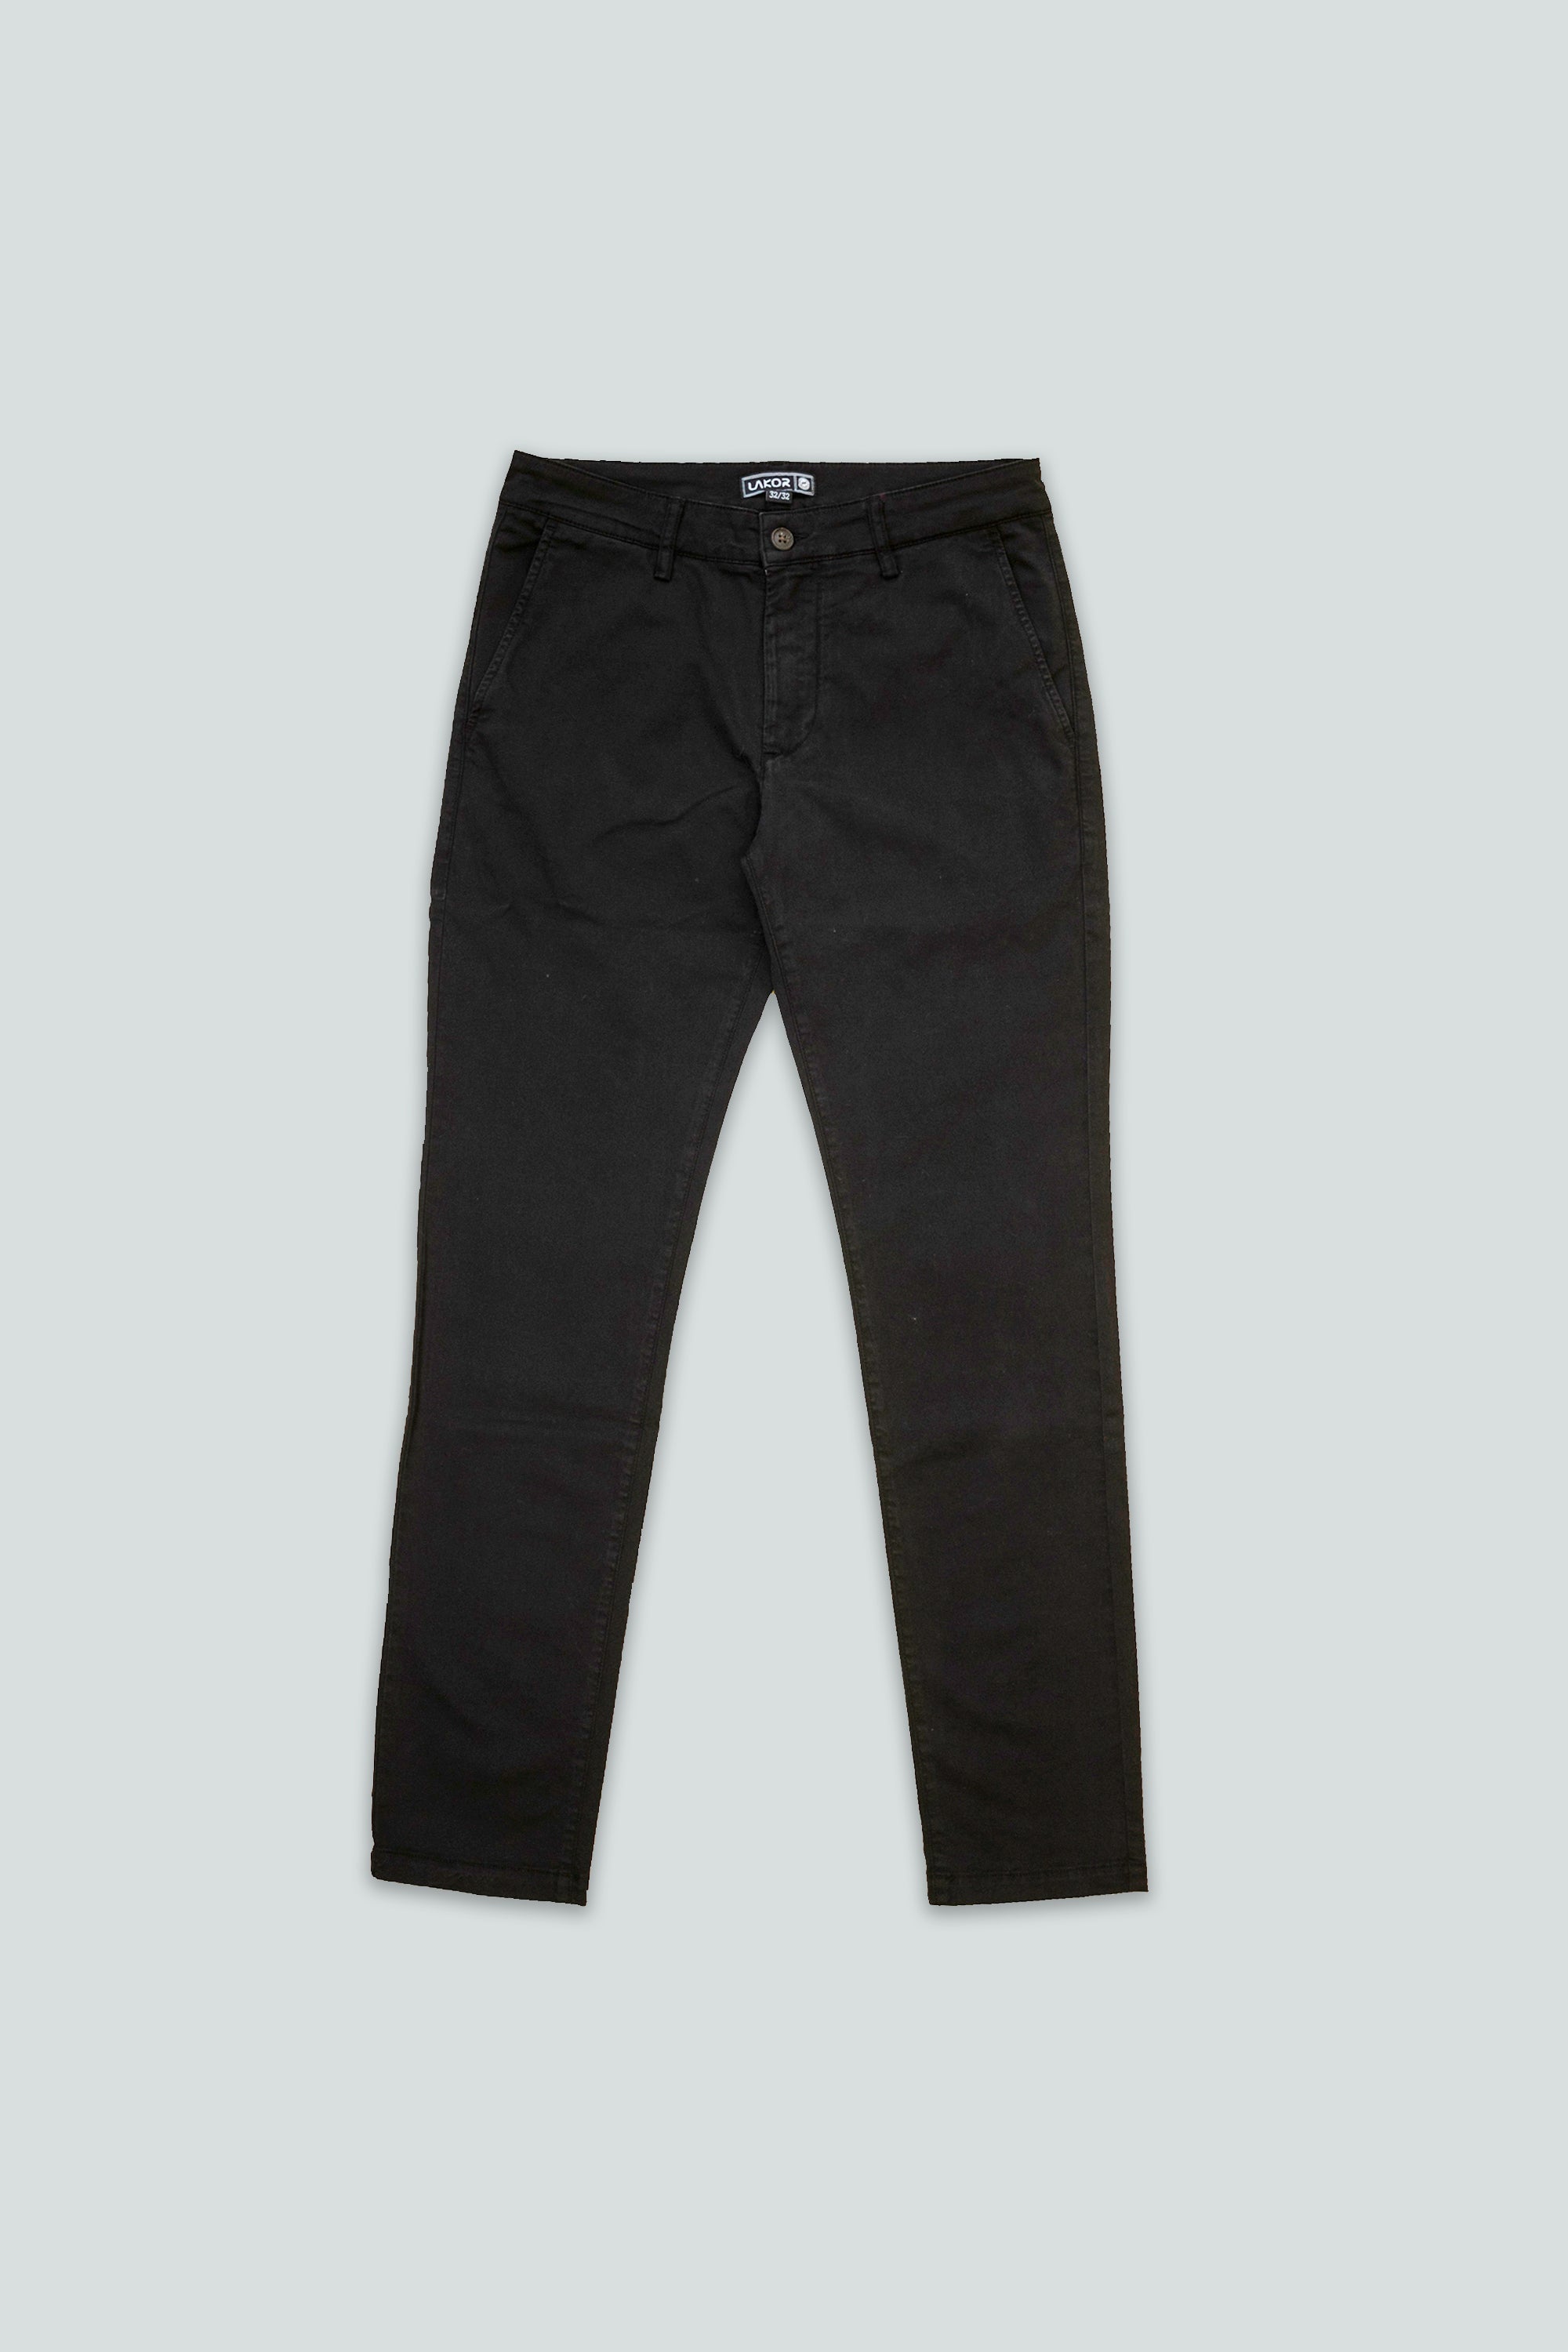 Chino Pants (Black)